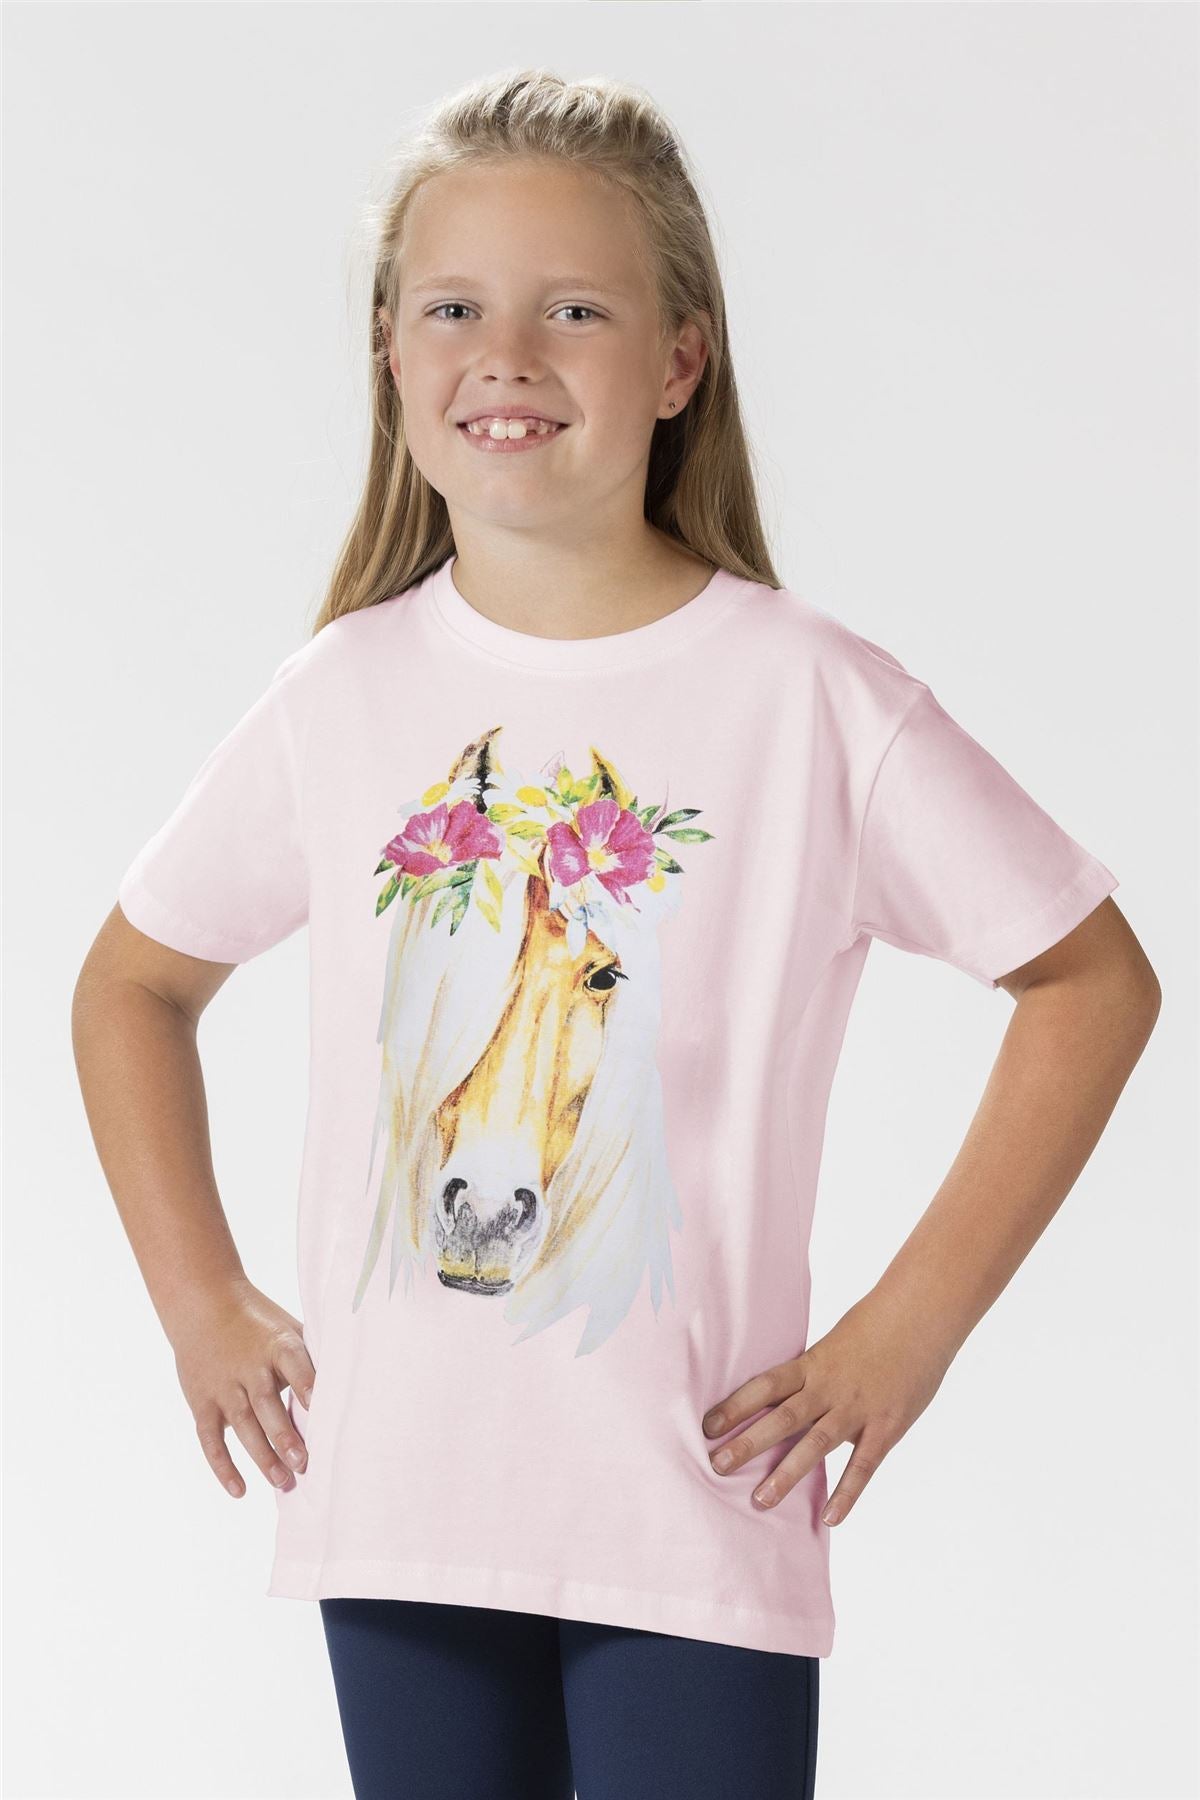 HKM Kids Tshirt Flower Horse - Just Horse Riders